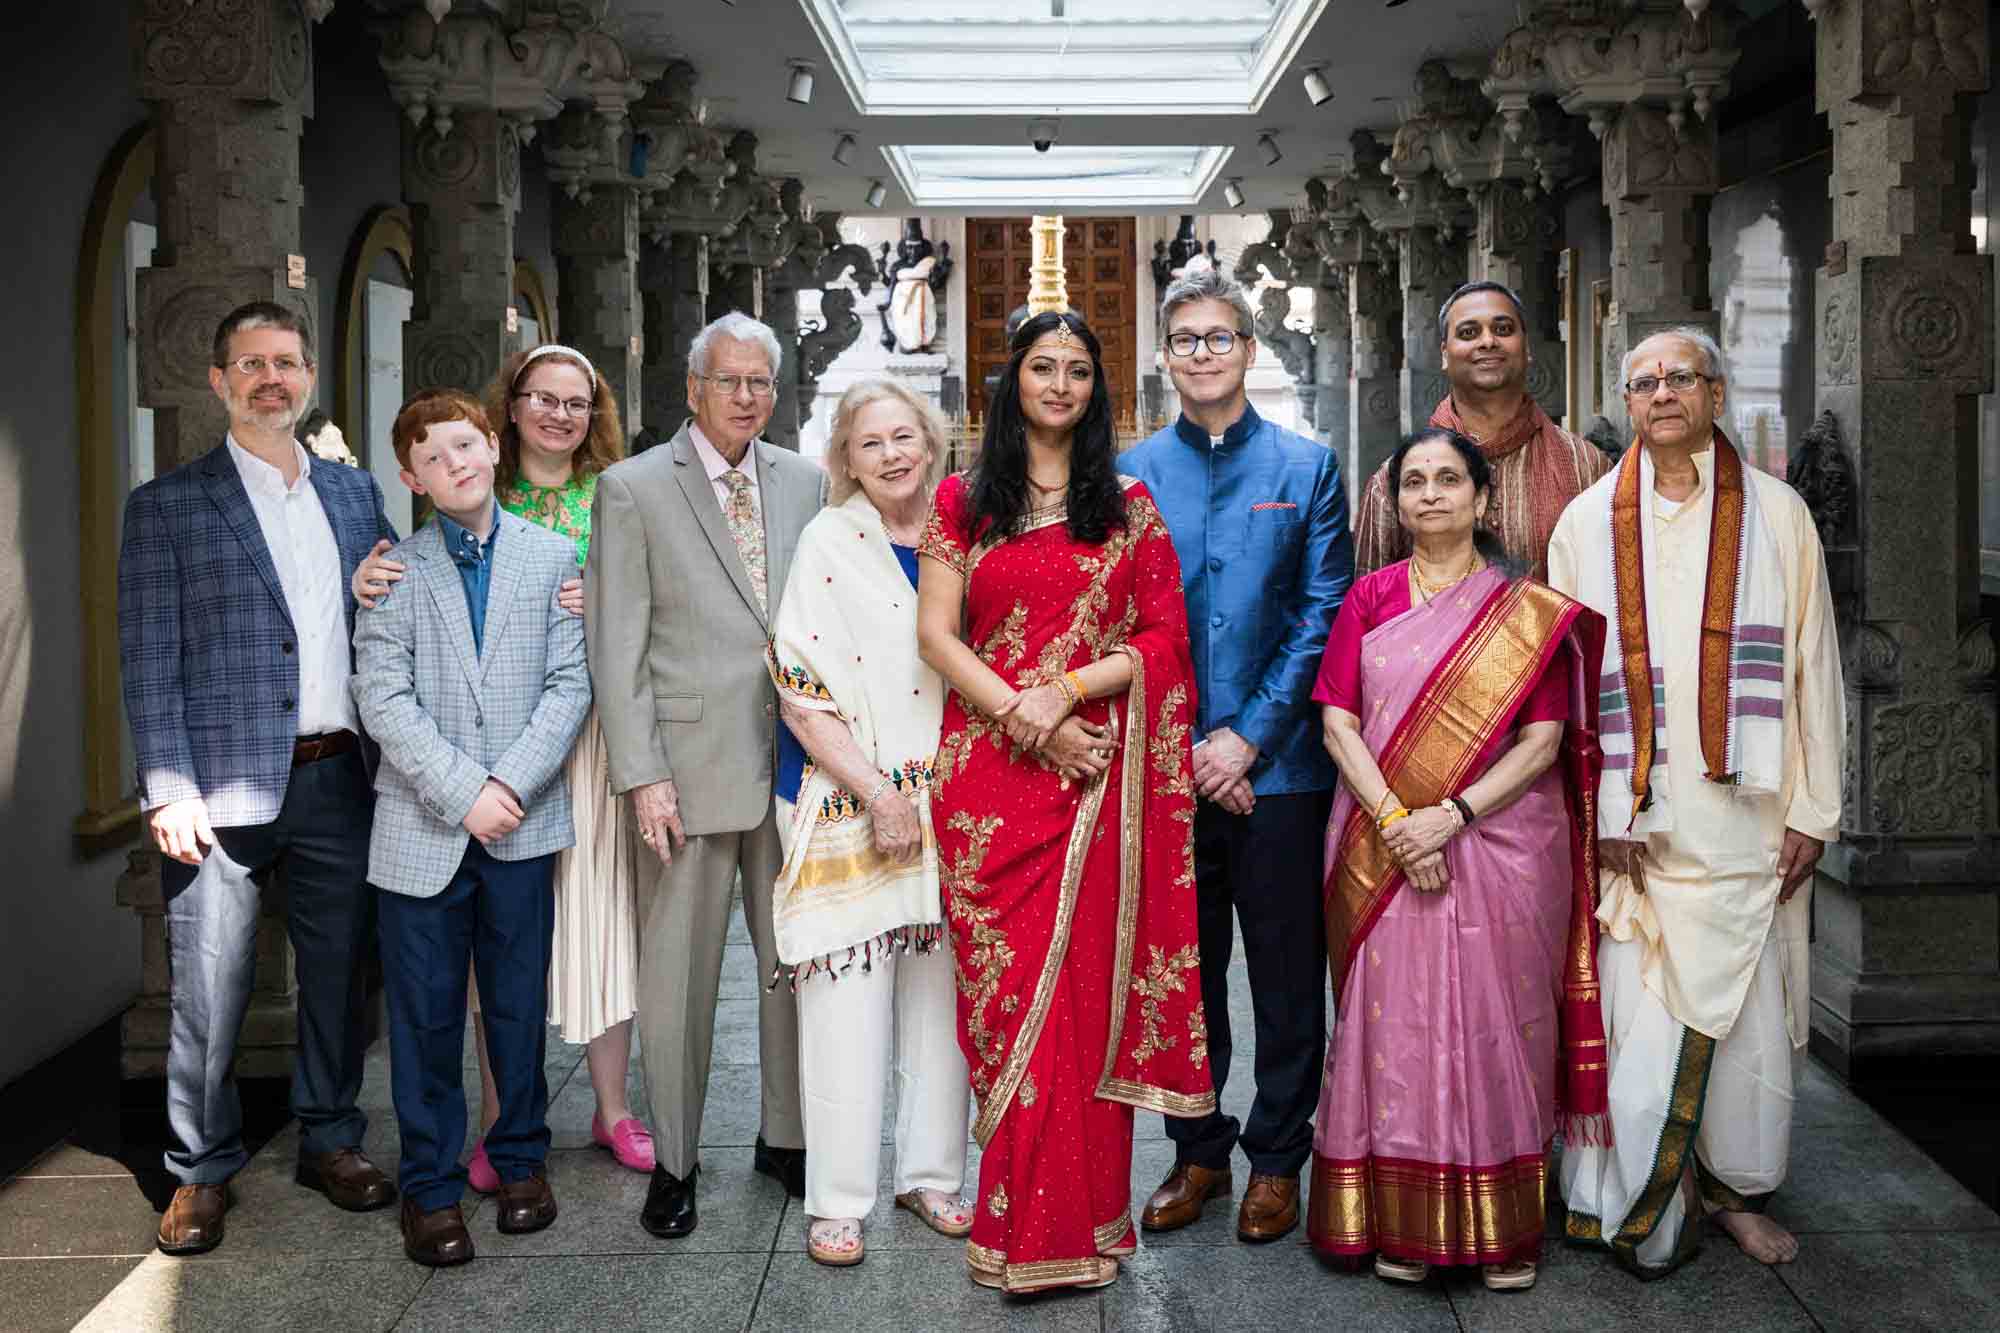 Ganesha Temple wedding photos of family portrait in main walkway